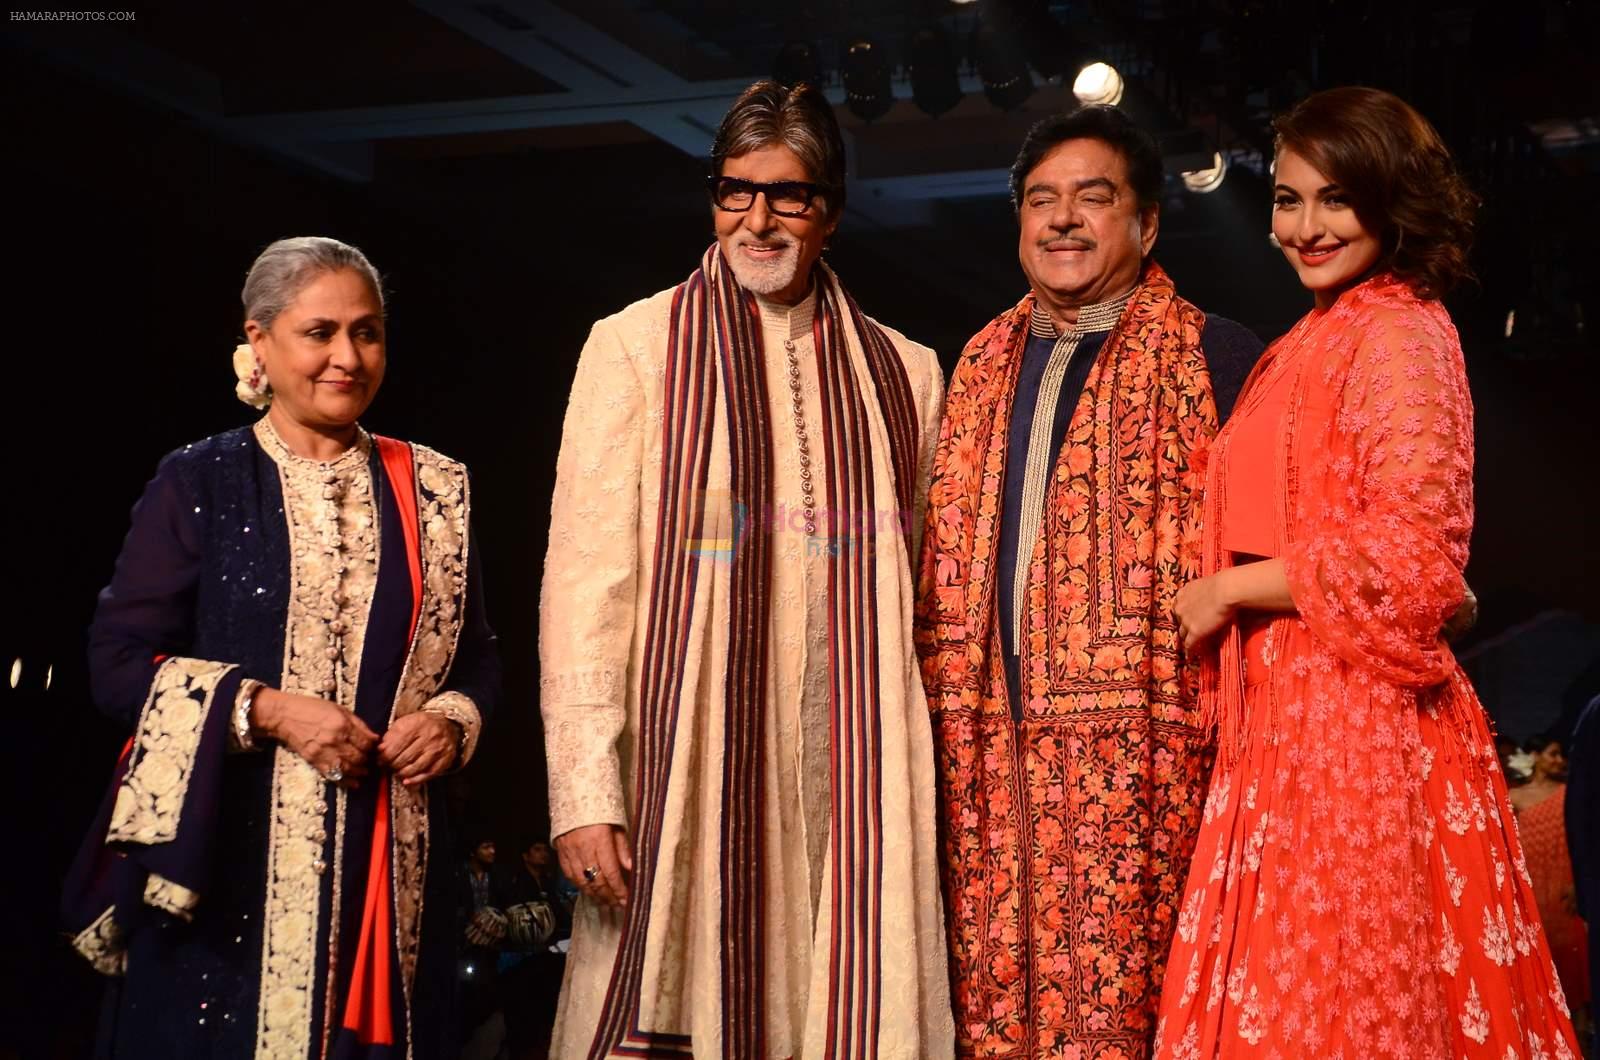 Amitabh Bachchan, Jaya Bachchan, Sonakshi Sinha, Shatrughan Sinha at Manish Malhotra presents Mijwan-The Legacy in Grand Hyatt, Mumbai on 4th April 2015